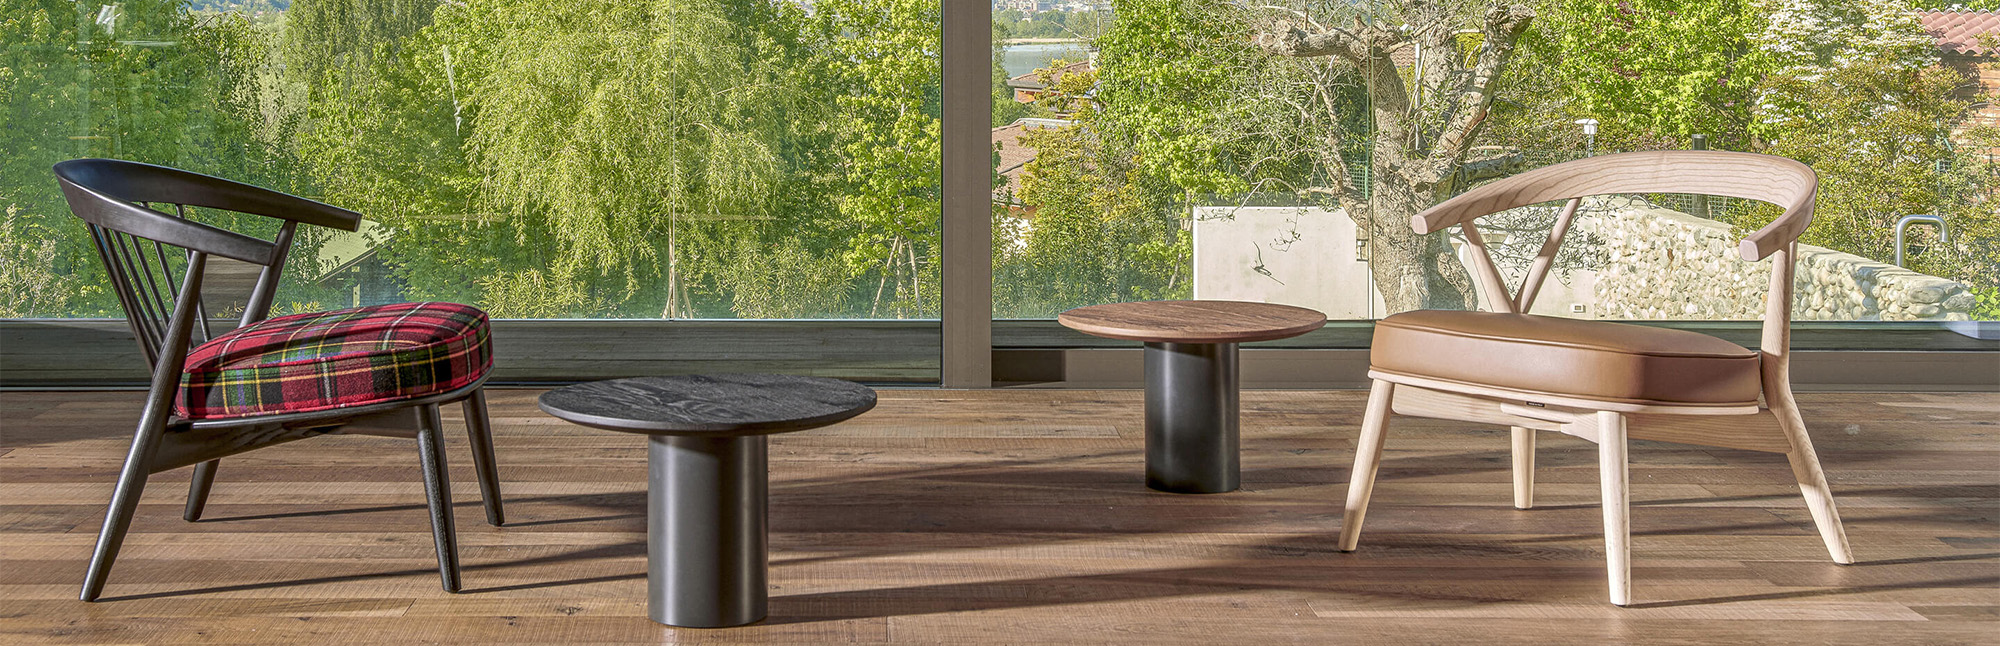 Haworth Cappellini furniture in the outdoor